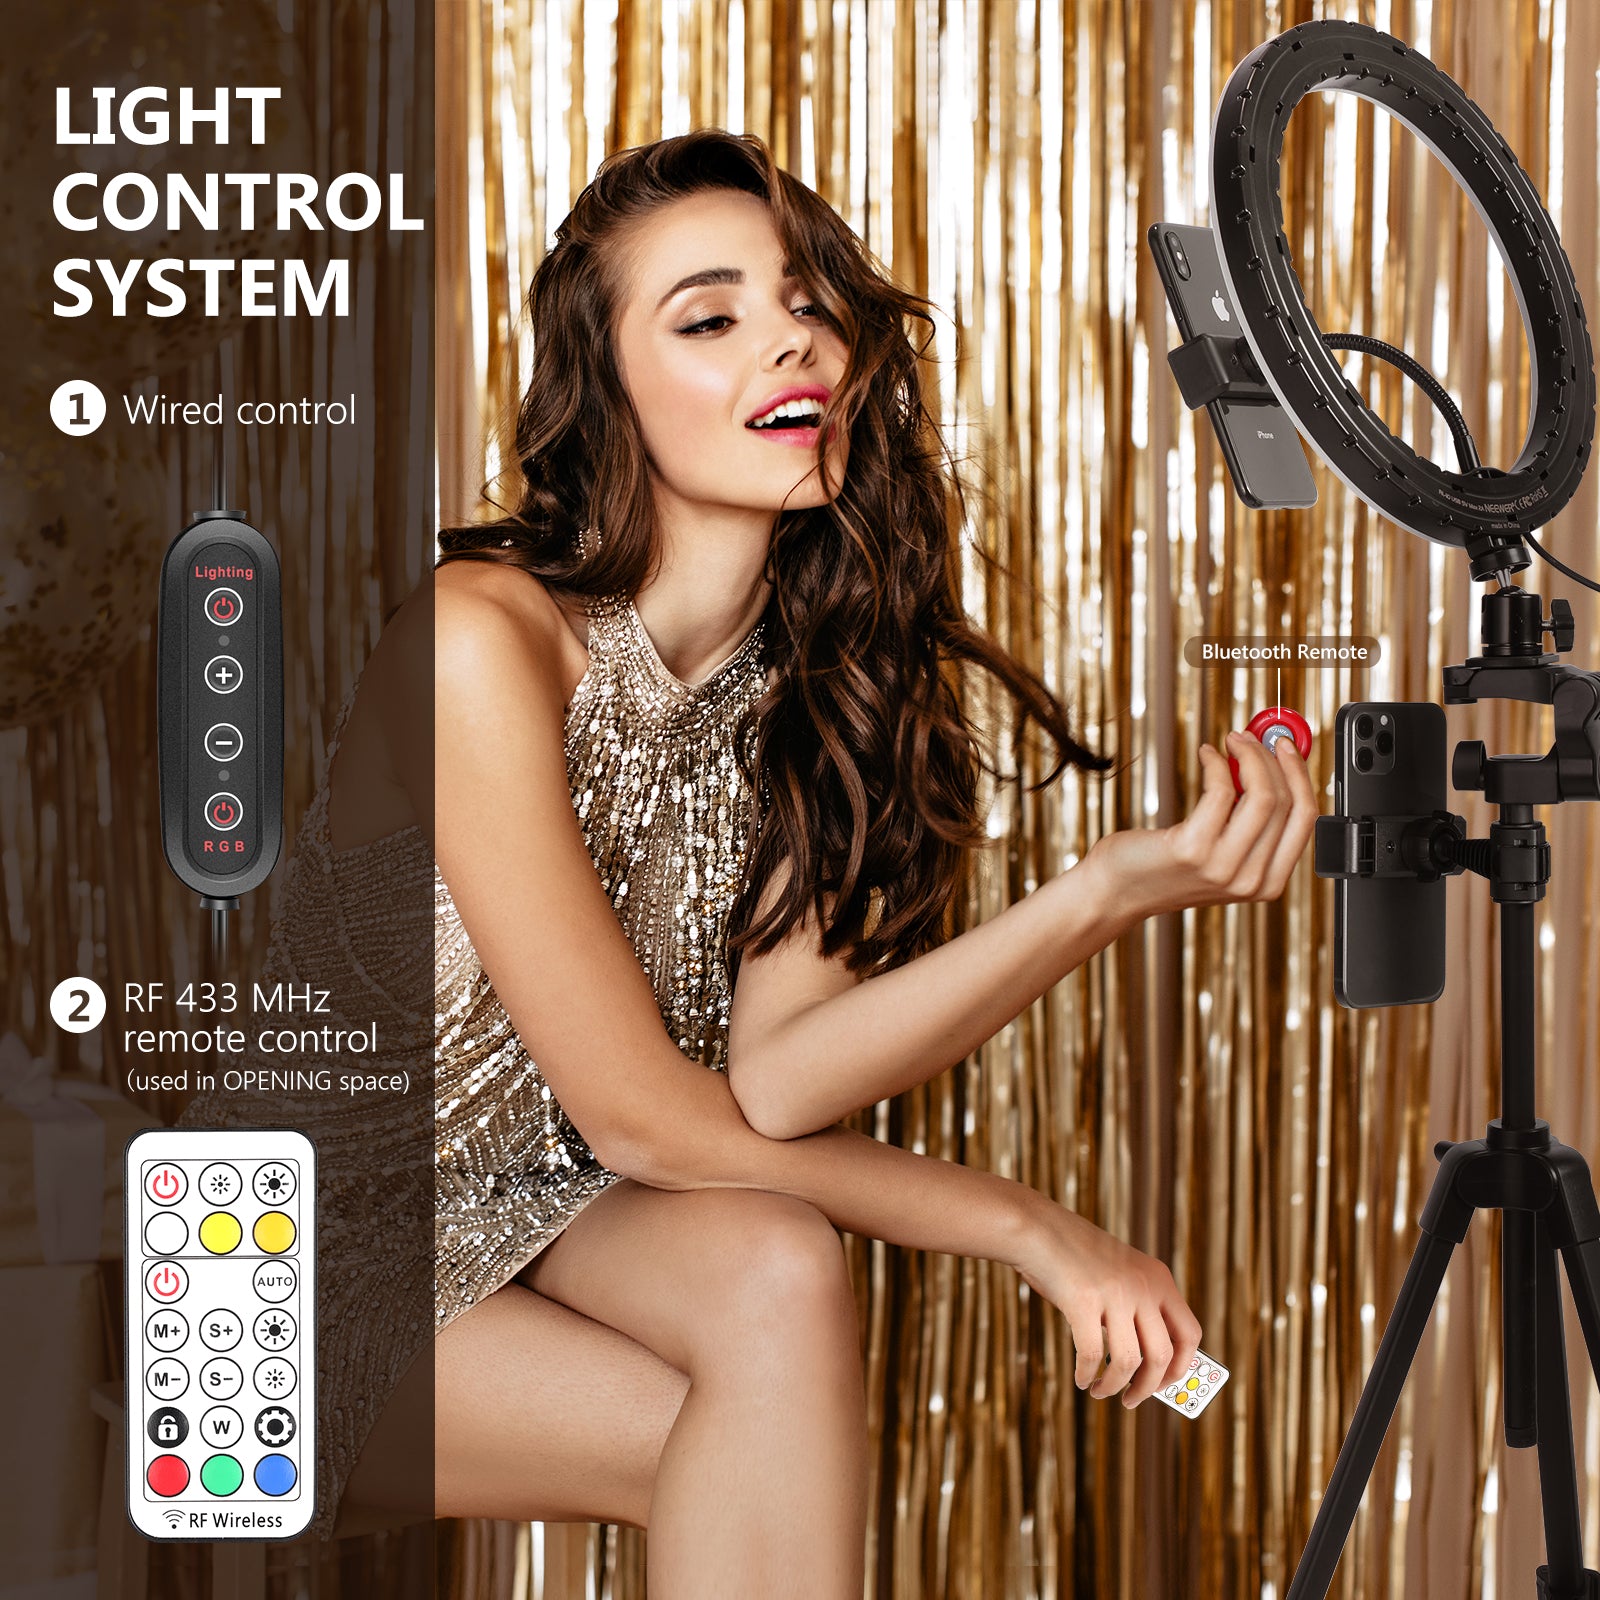 Neewer 10-inch RGB Dimmable USB Selfie Ring Light – NEEWER